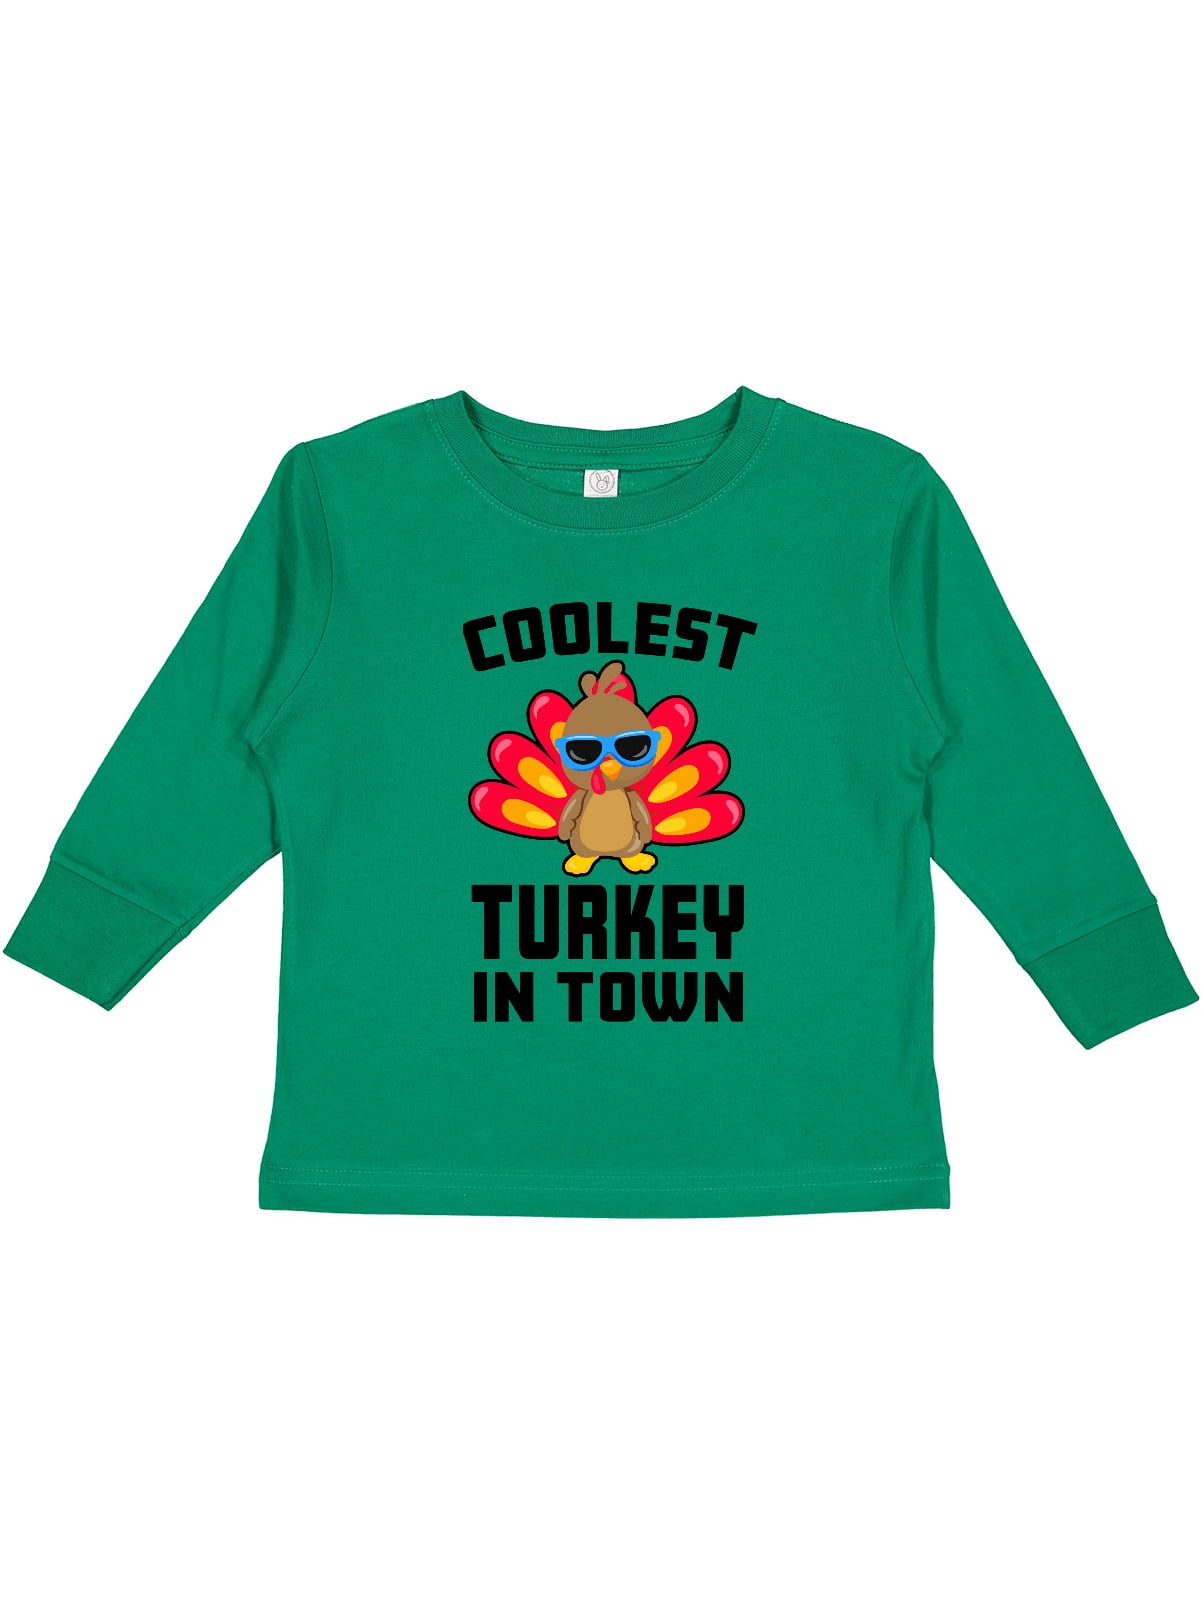 Turkey Thanksgiving Day Baby Girls Short Sleeve Ruffles T-Shirt Tops 2-Pack Cotton Tee